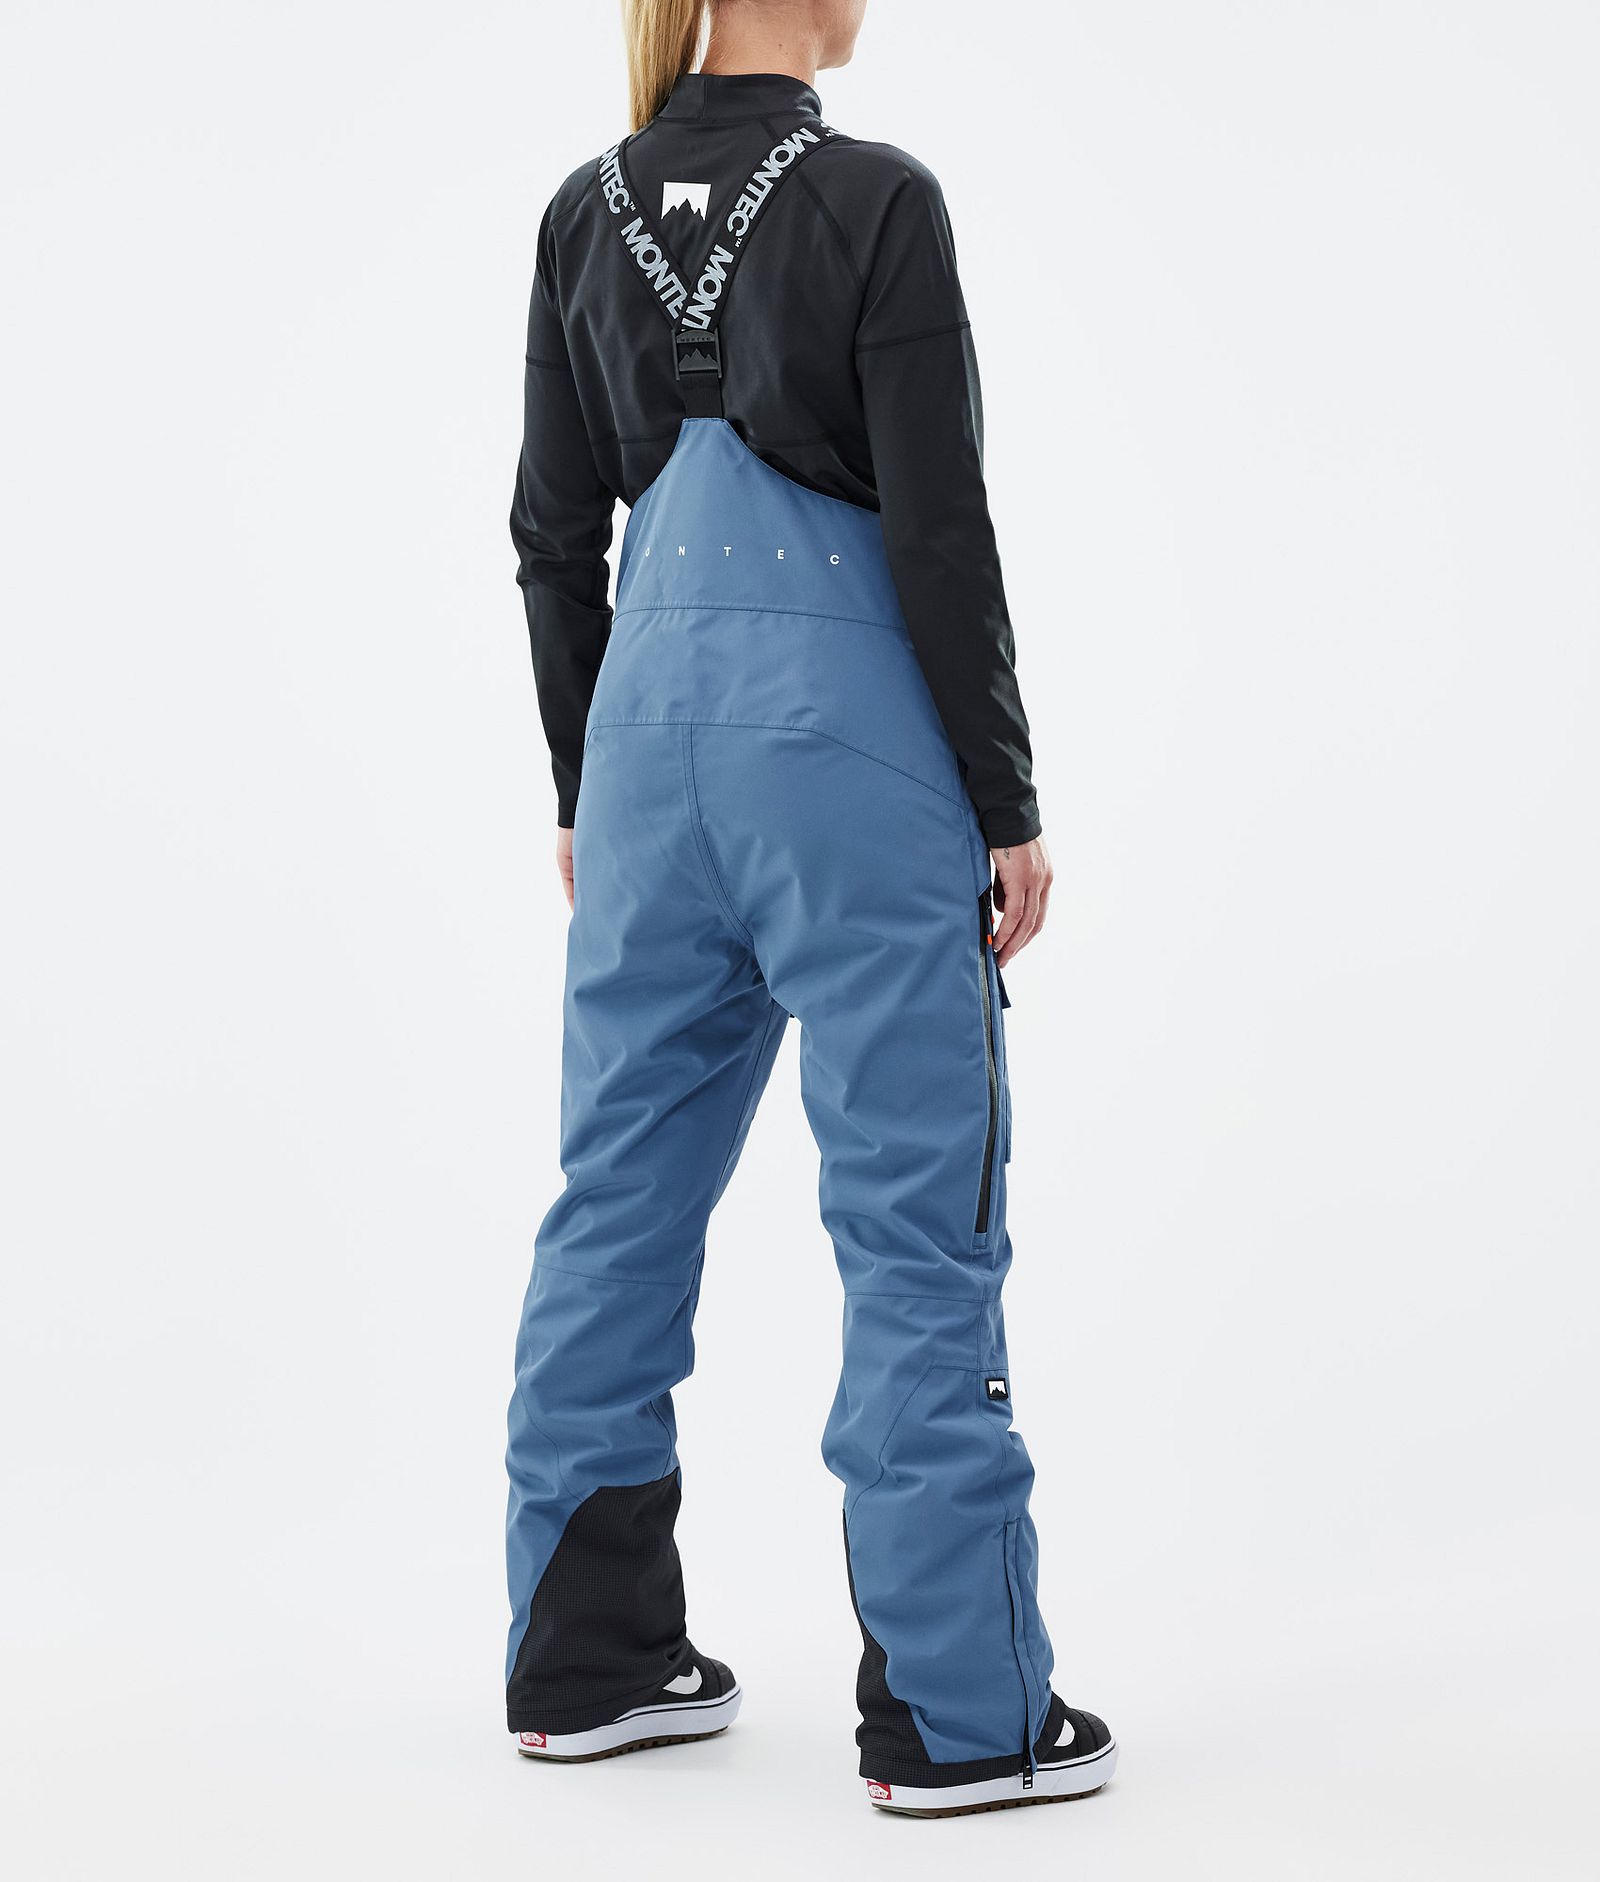 Fawk W Pantalon de Snowboard Femme Blue Steel, Image 4 sur 7